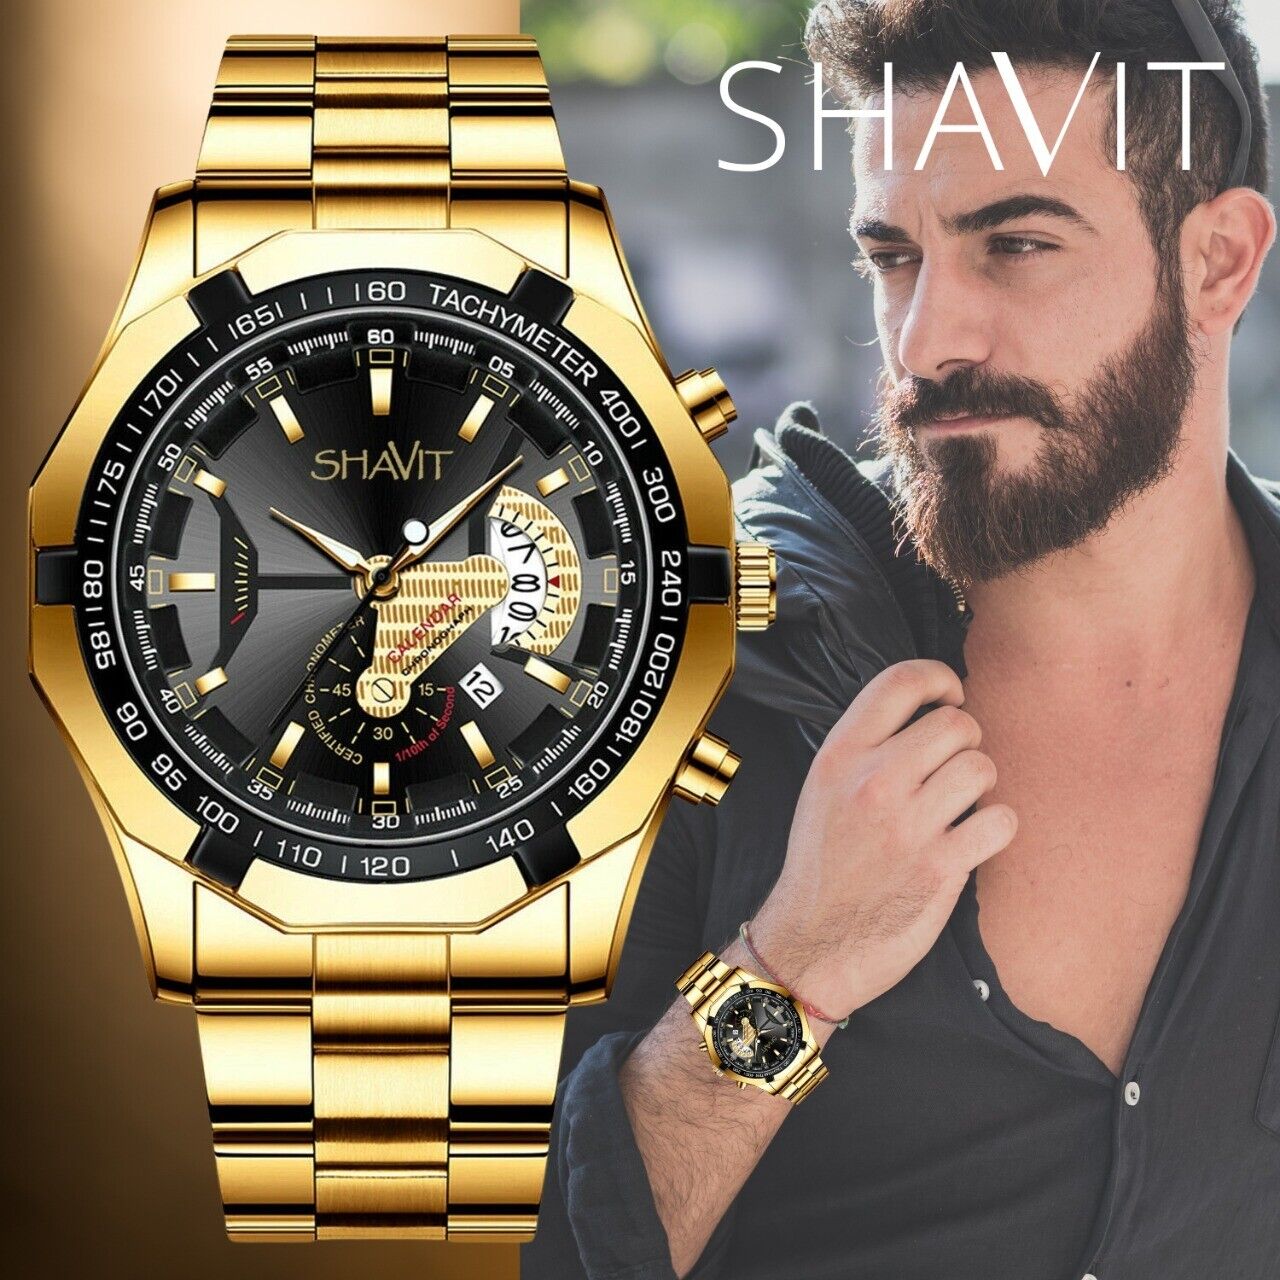 Gold Men's Watch Classic Stainless Steel Quartz Luxury Gift Wristwatch For MEN - Gold / Black